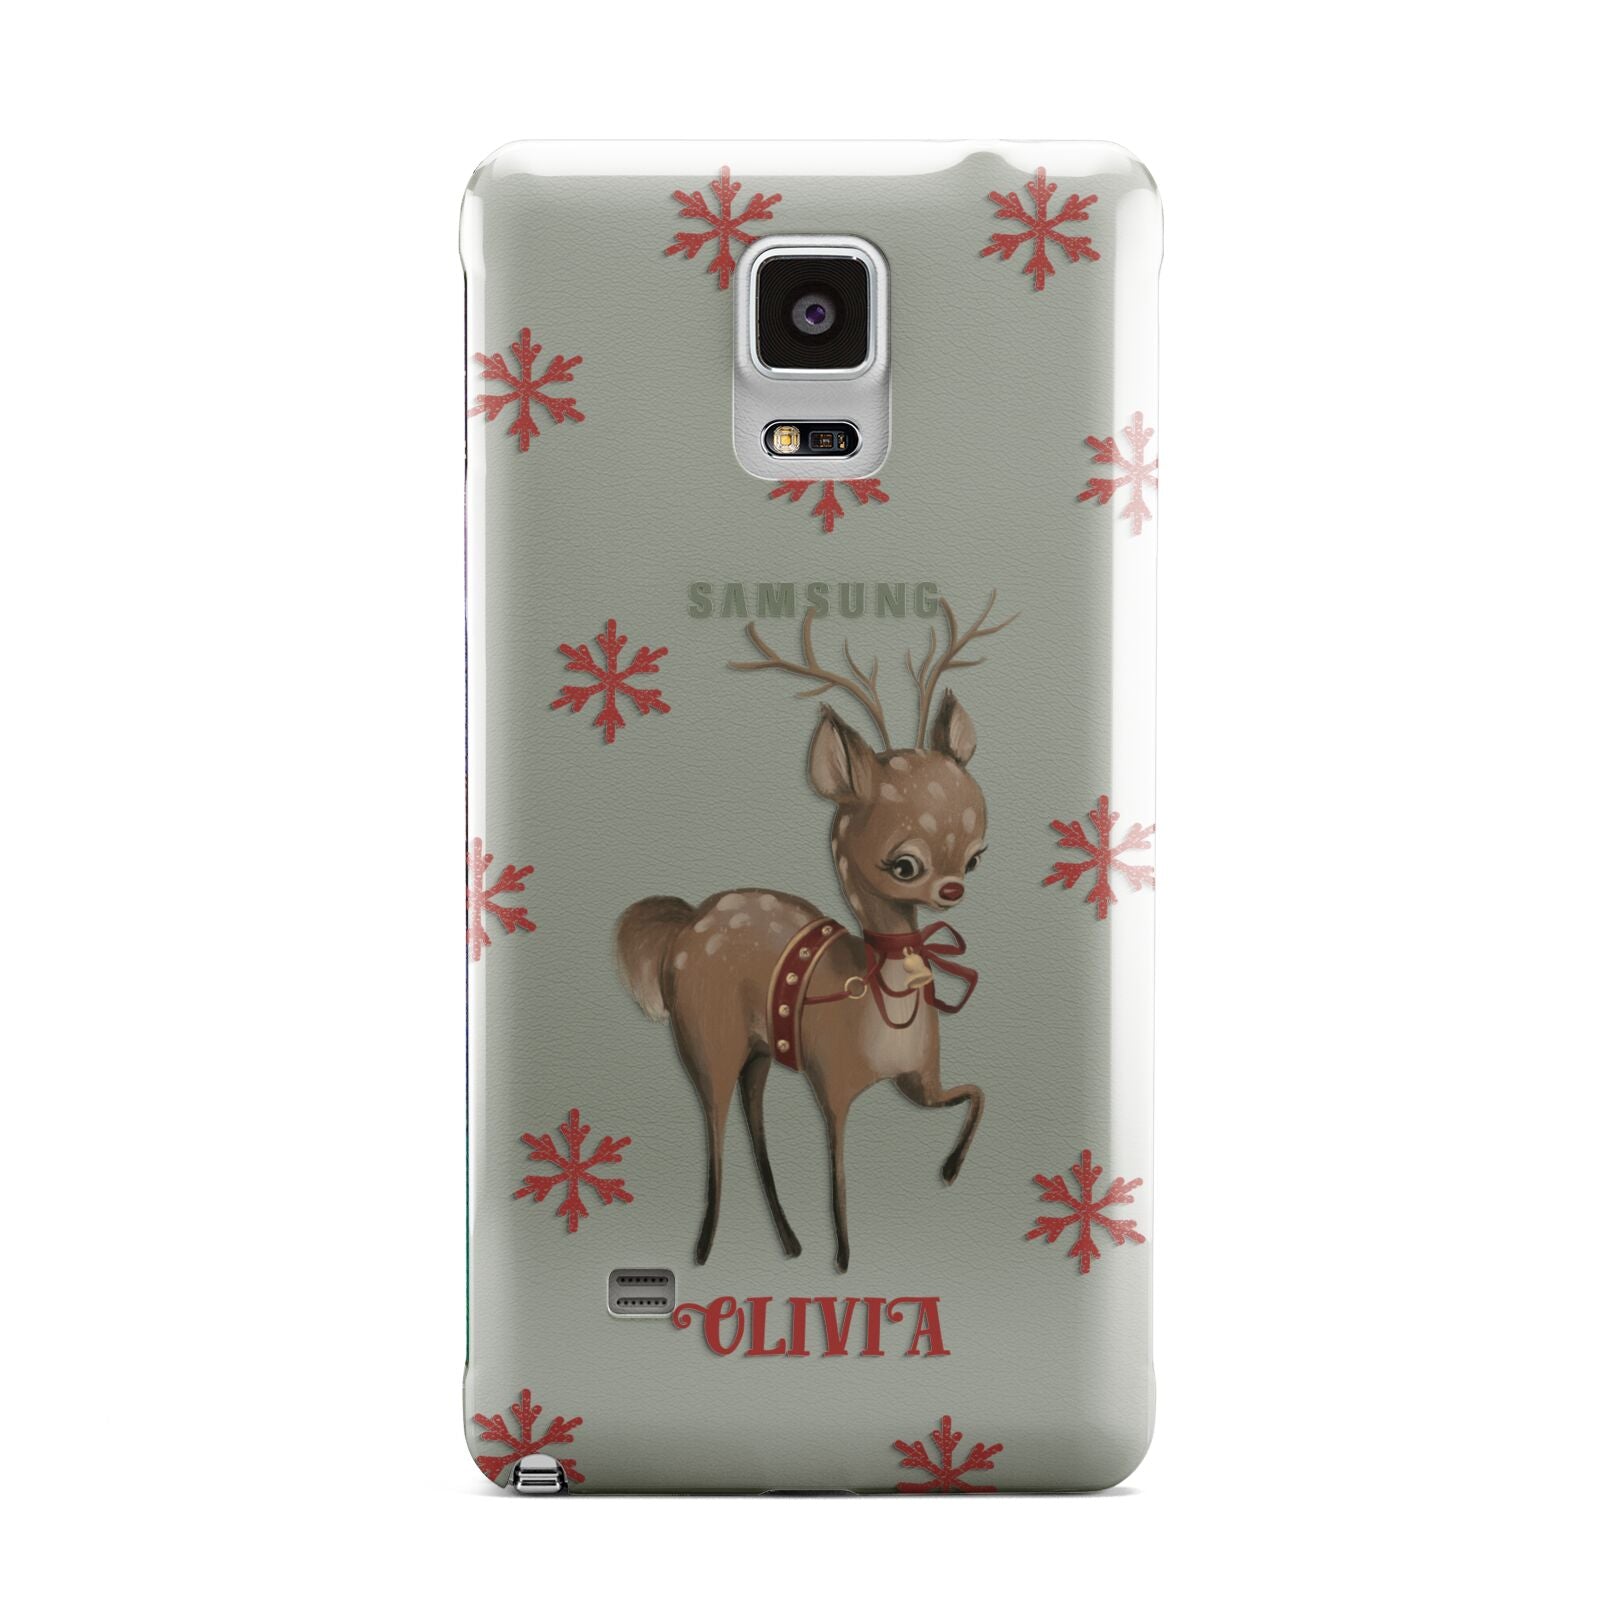 Rudolph Delivery Samsung Galaxy Note 4 Case